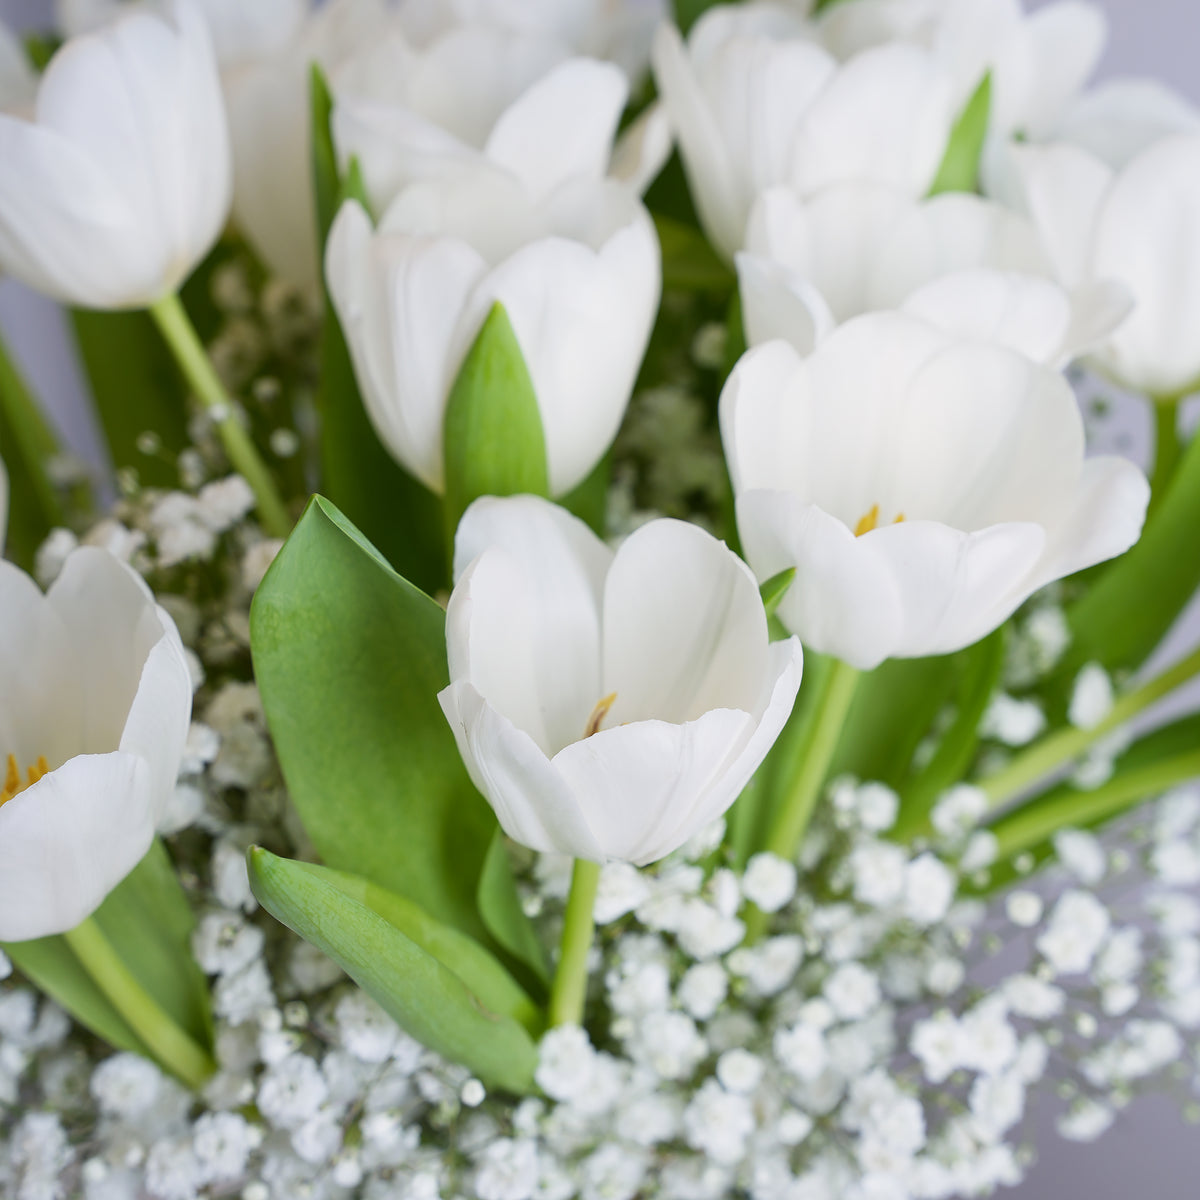 White Tulip Delight with Free Chocolates